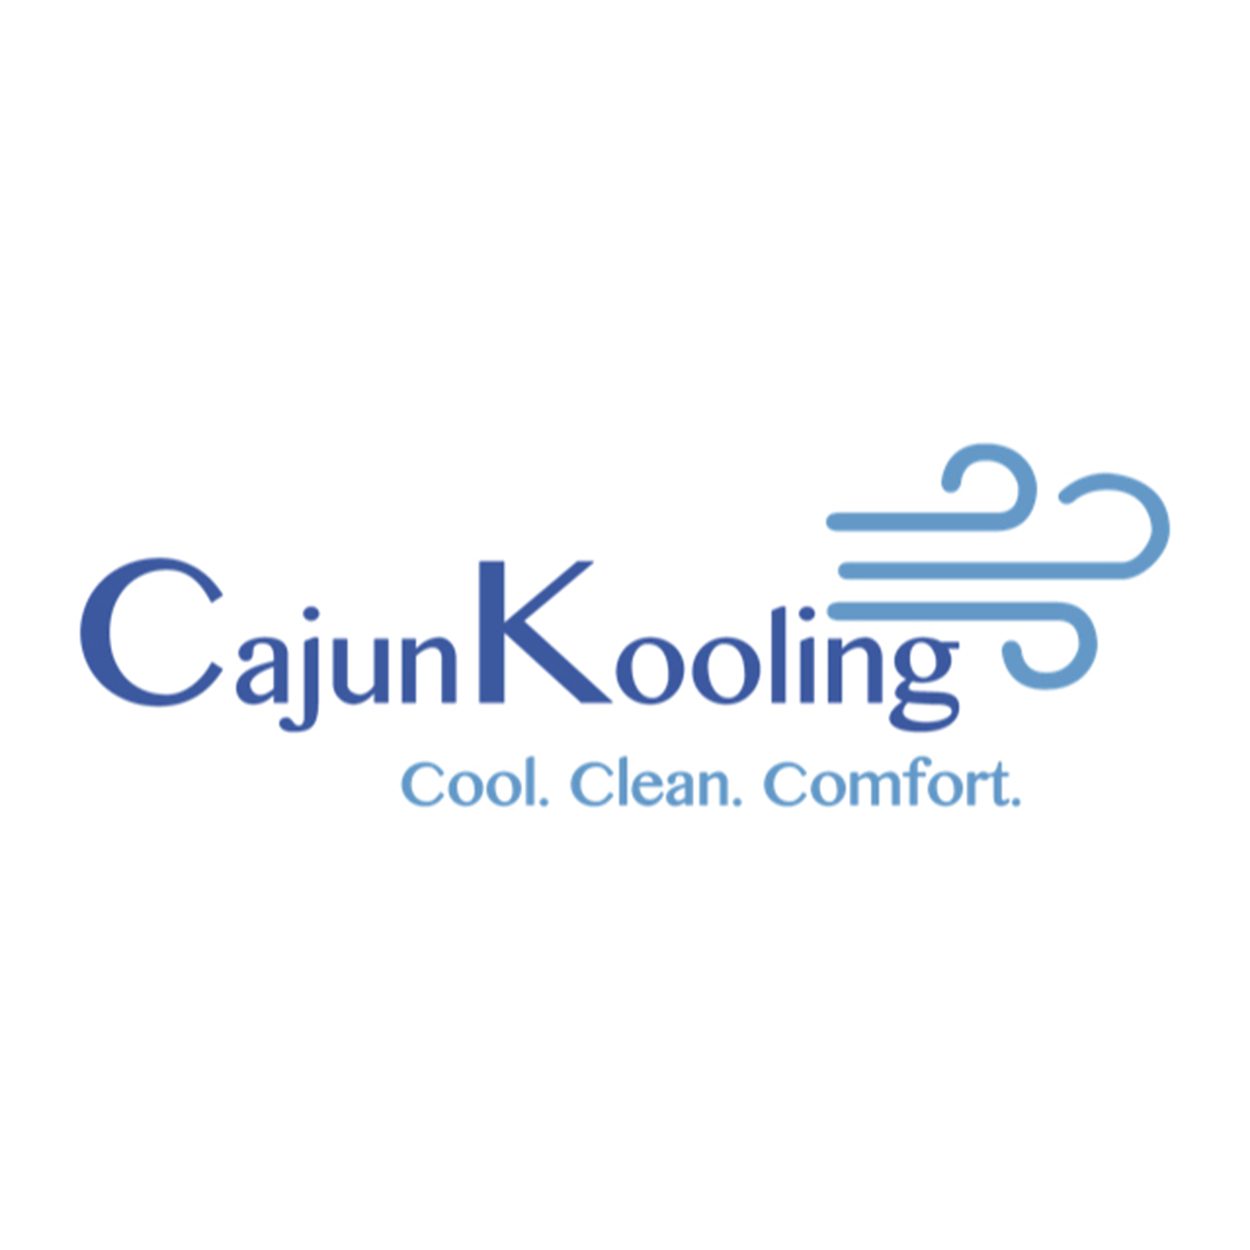 Cajun Kooling logo